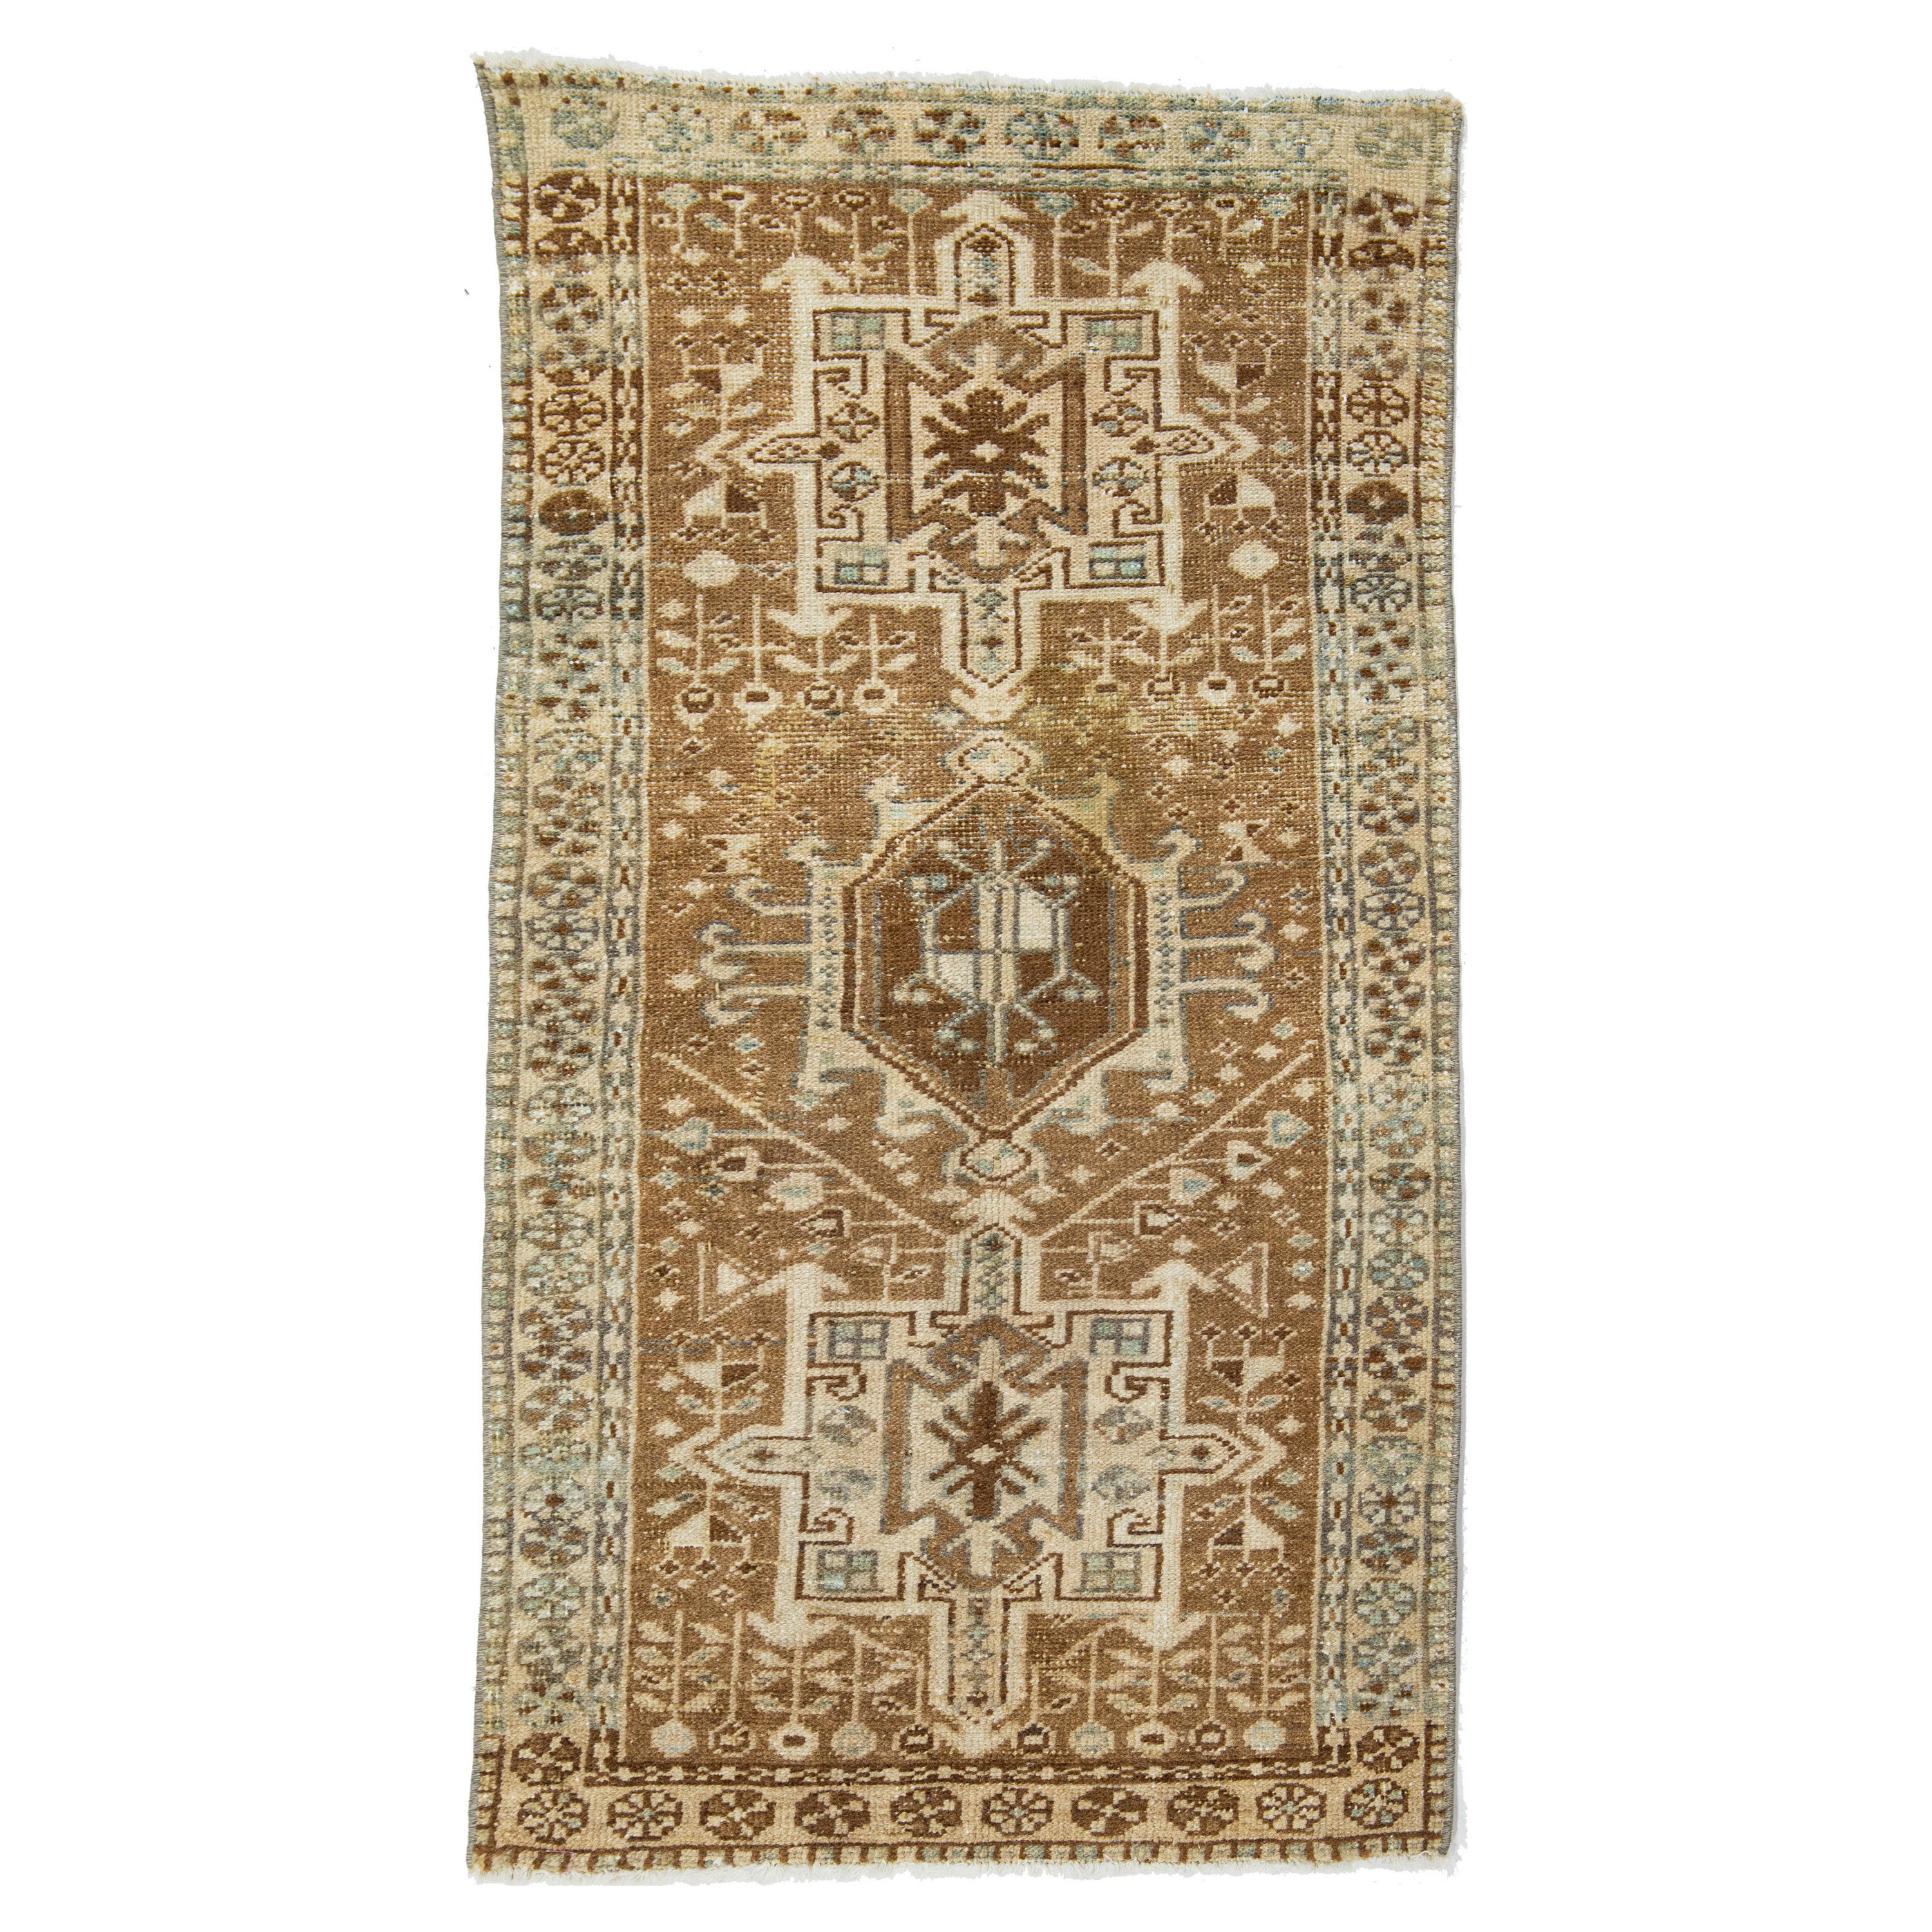 Brown Antique Handmade Persian Heriz Scatter Wool Rug with Allover Motif